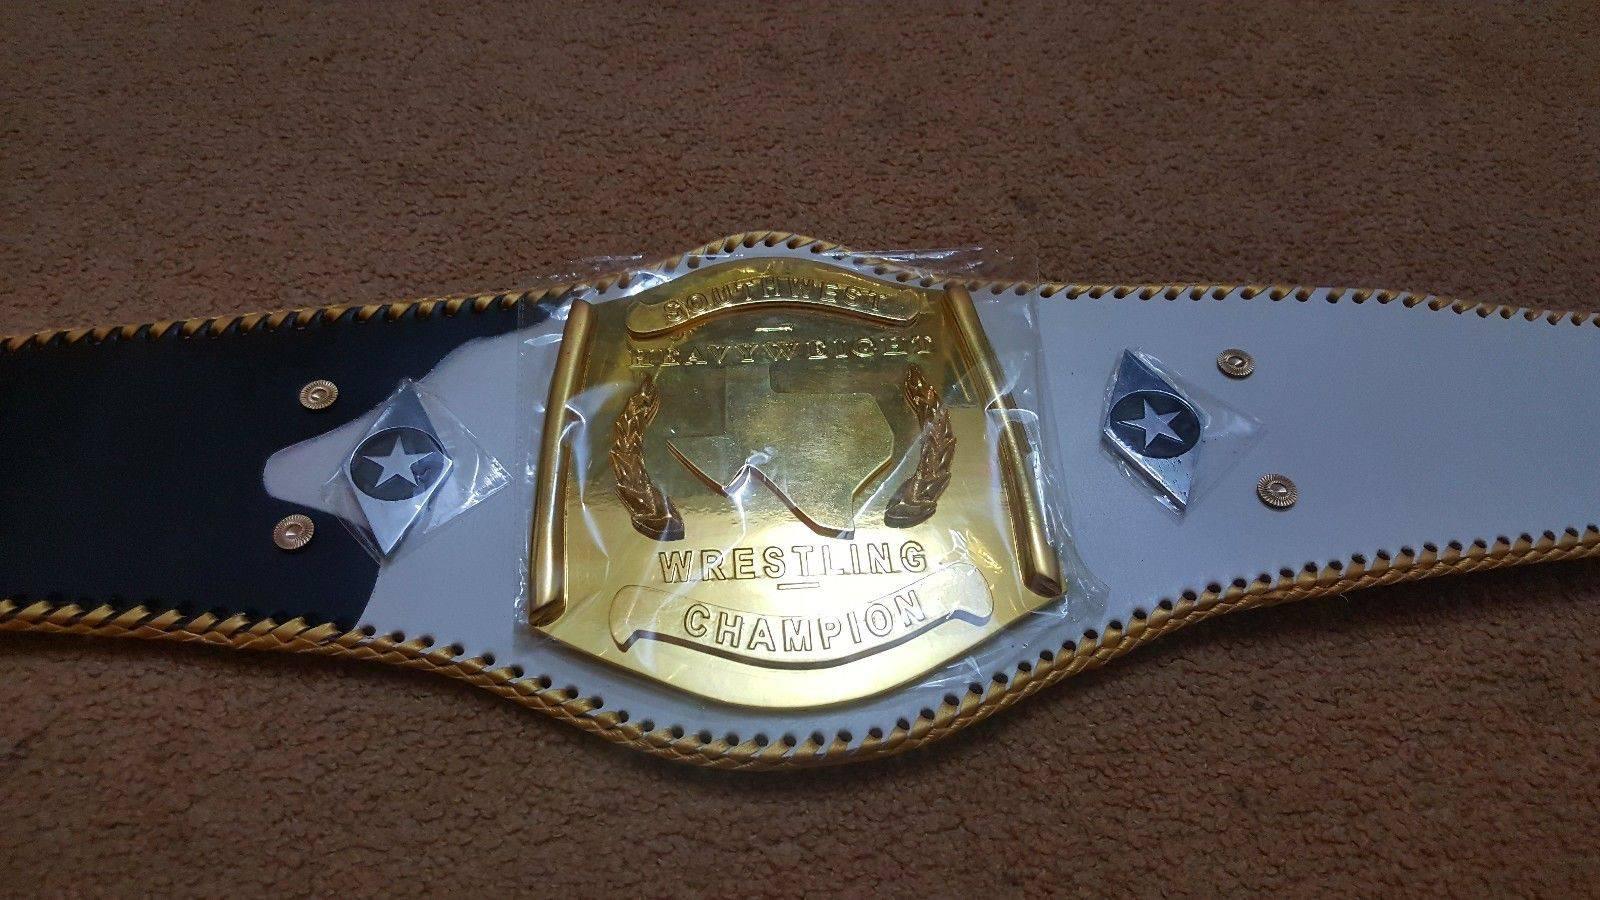 SOUTHWEST HEAVYWEIGHT Championship Belt - Zees Belts